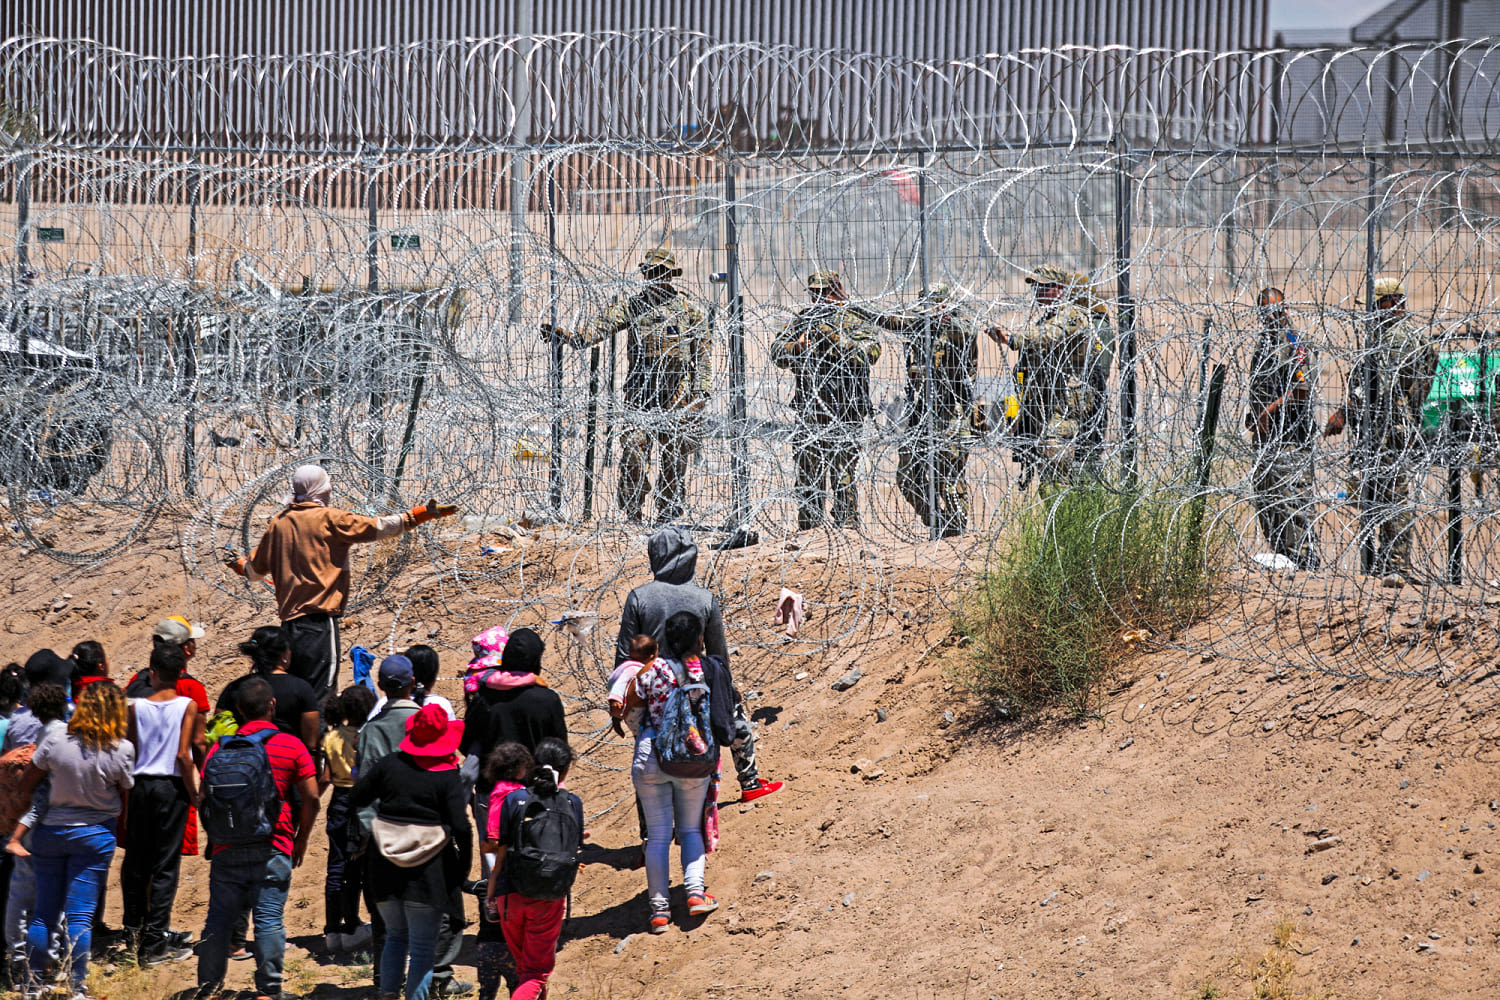 Senate Democrats revive bipartisan border security bill as GOP vows to block it again